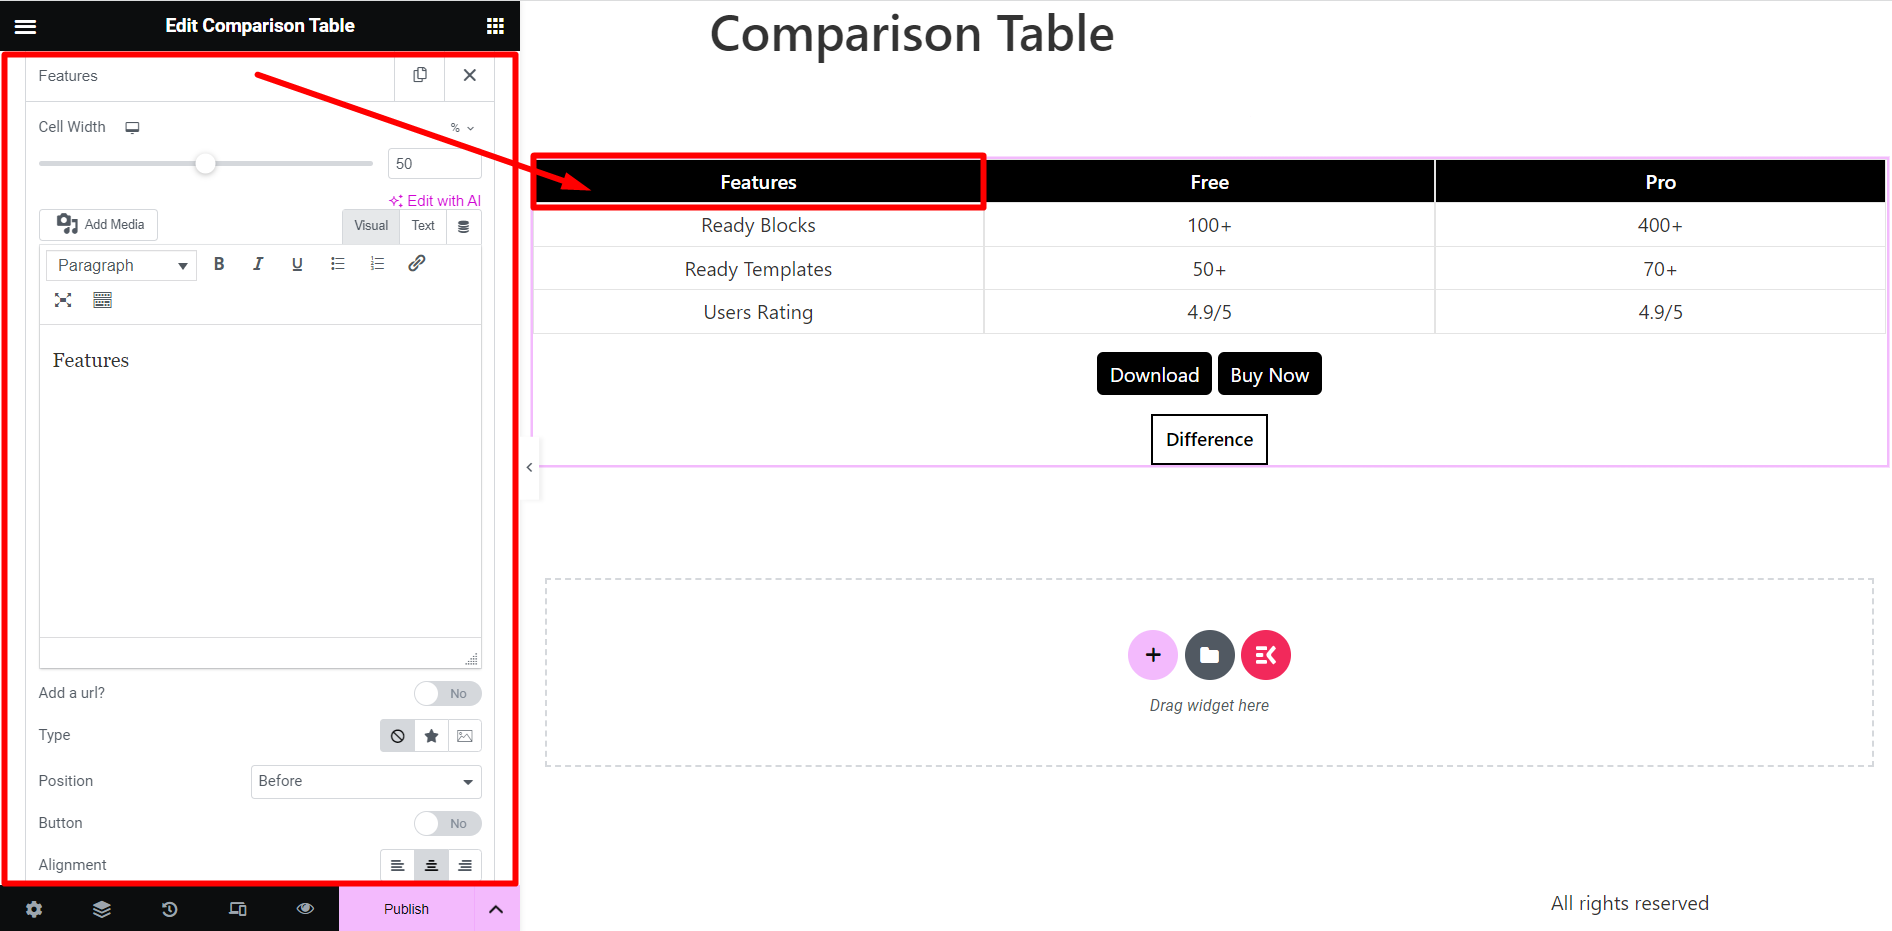 ElementsKit comparison table offers various  customization options